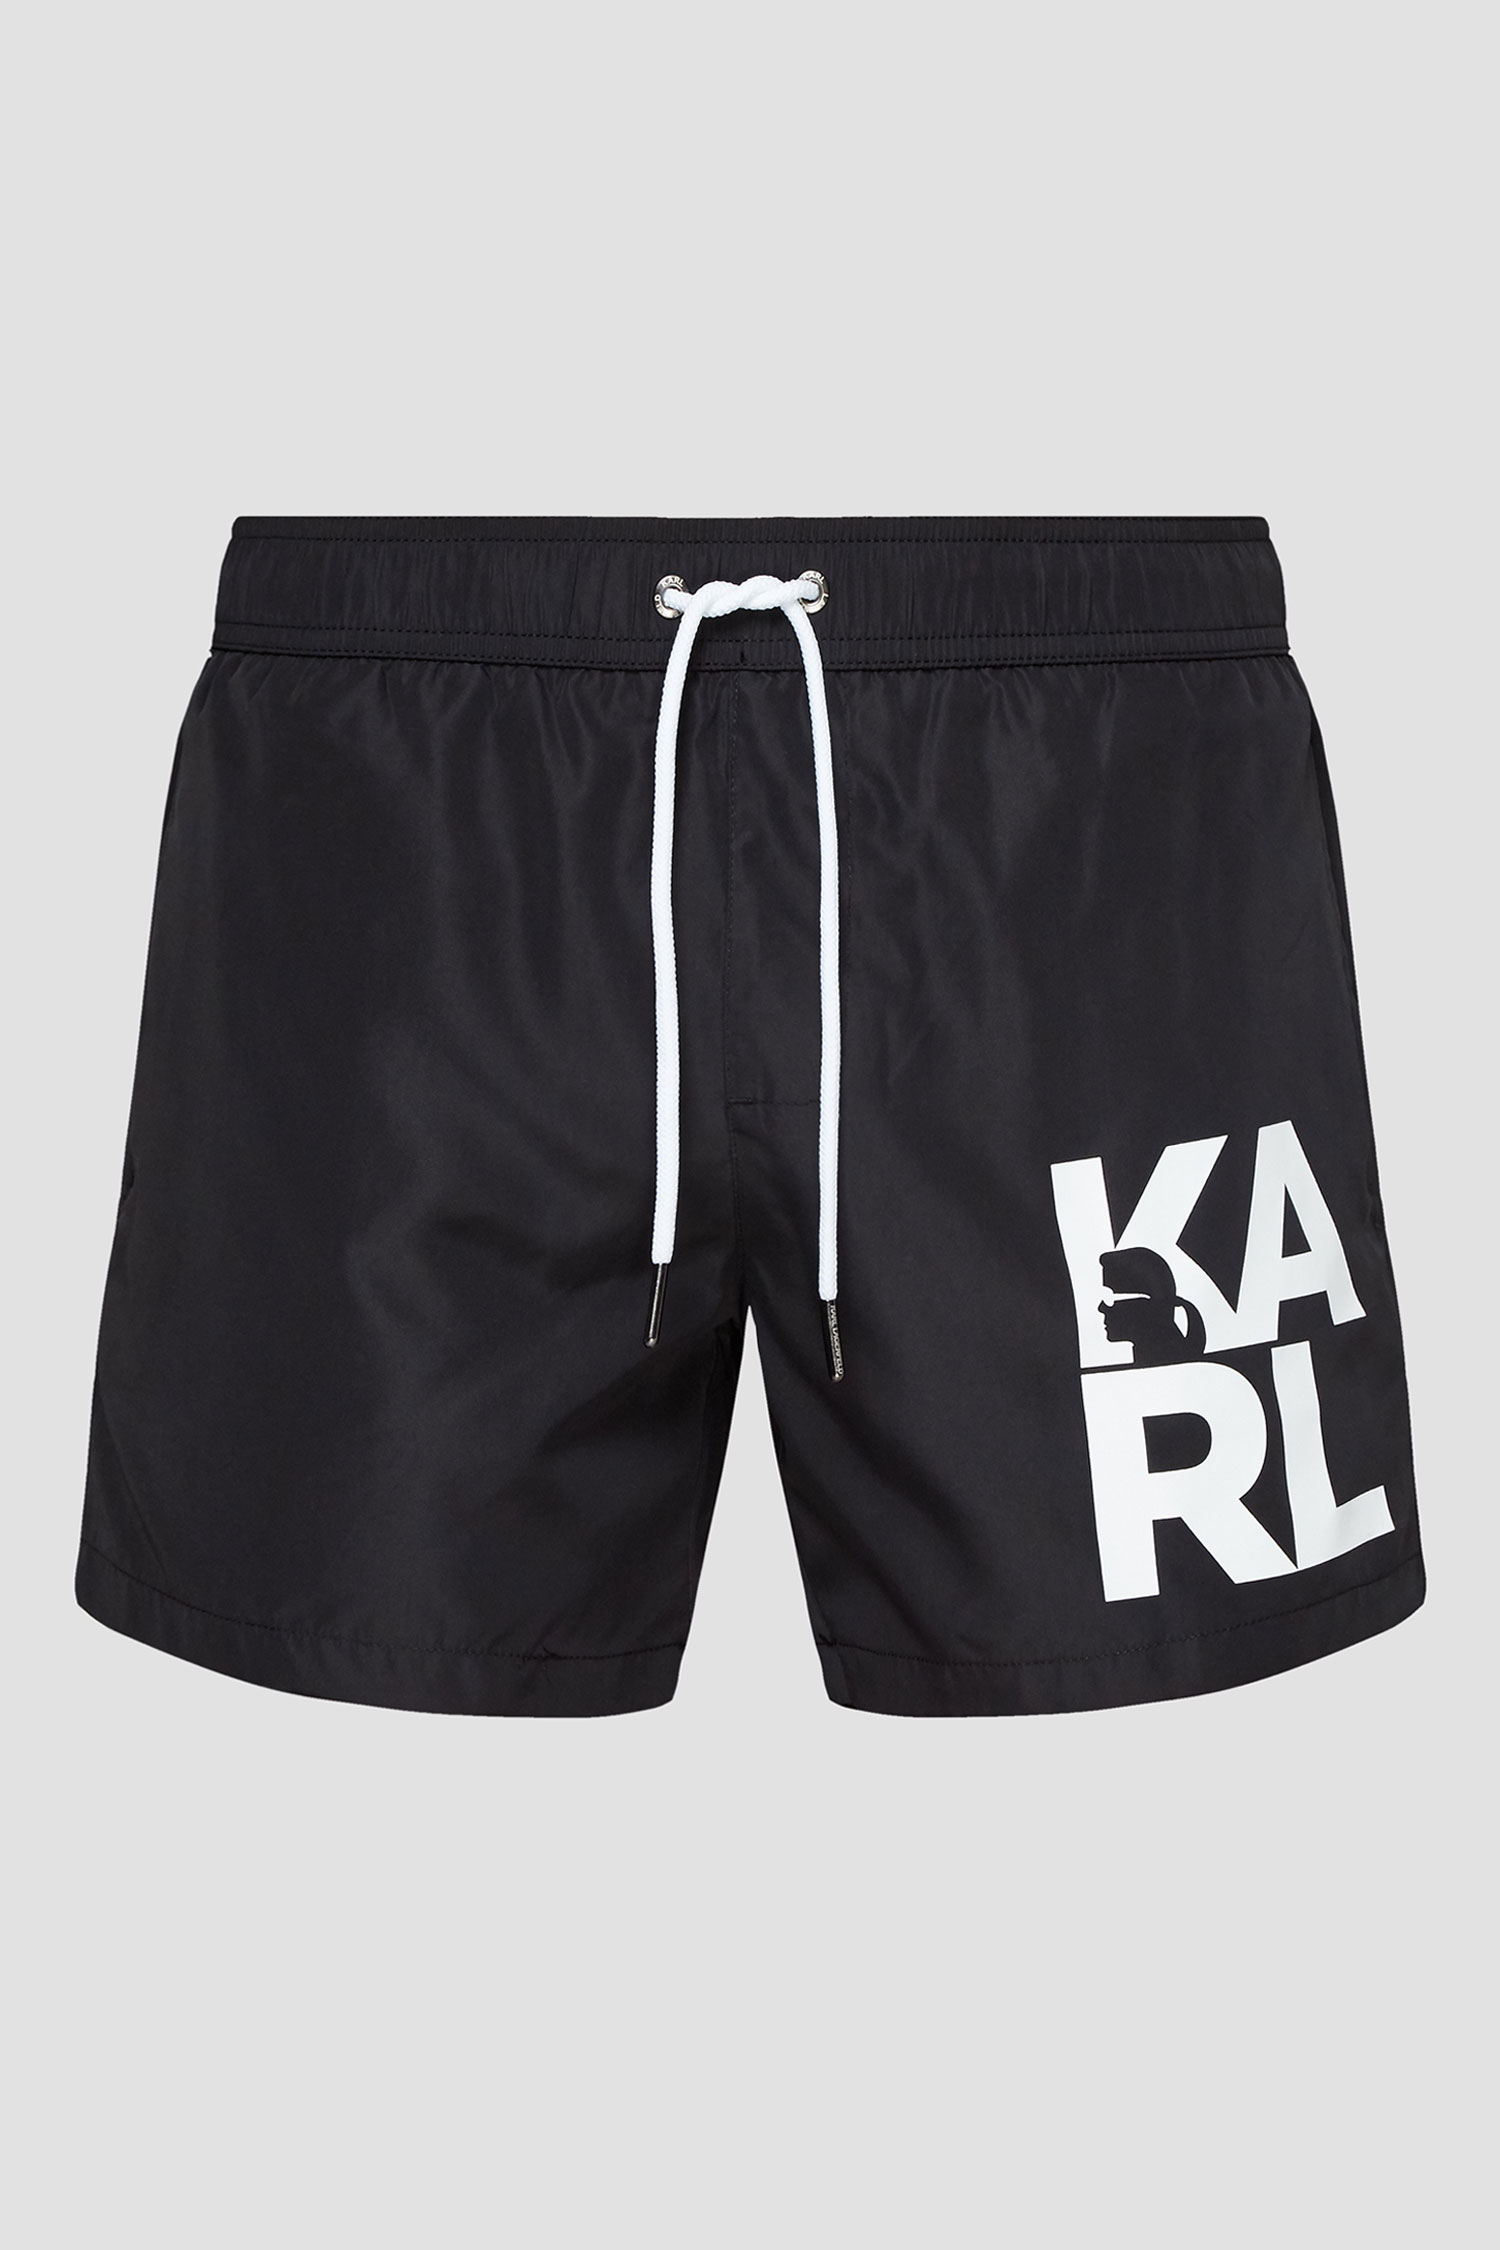 Черные плавательные шорты для парней Karl Lagerfeld KL21MBS02;BLACK